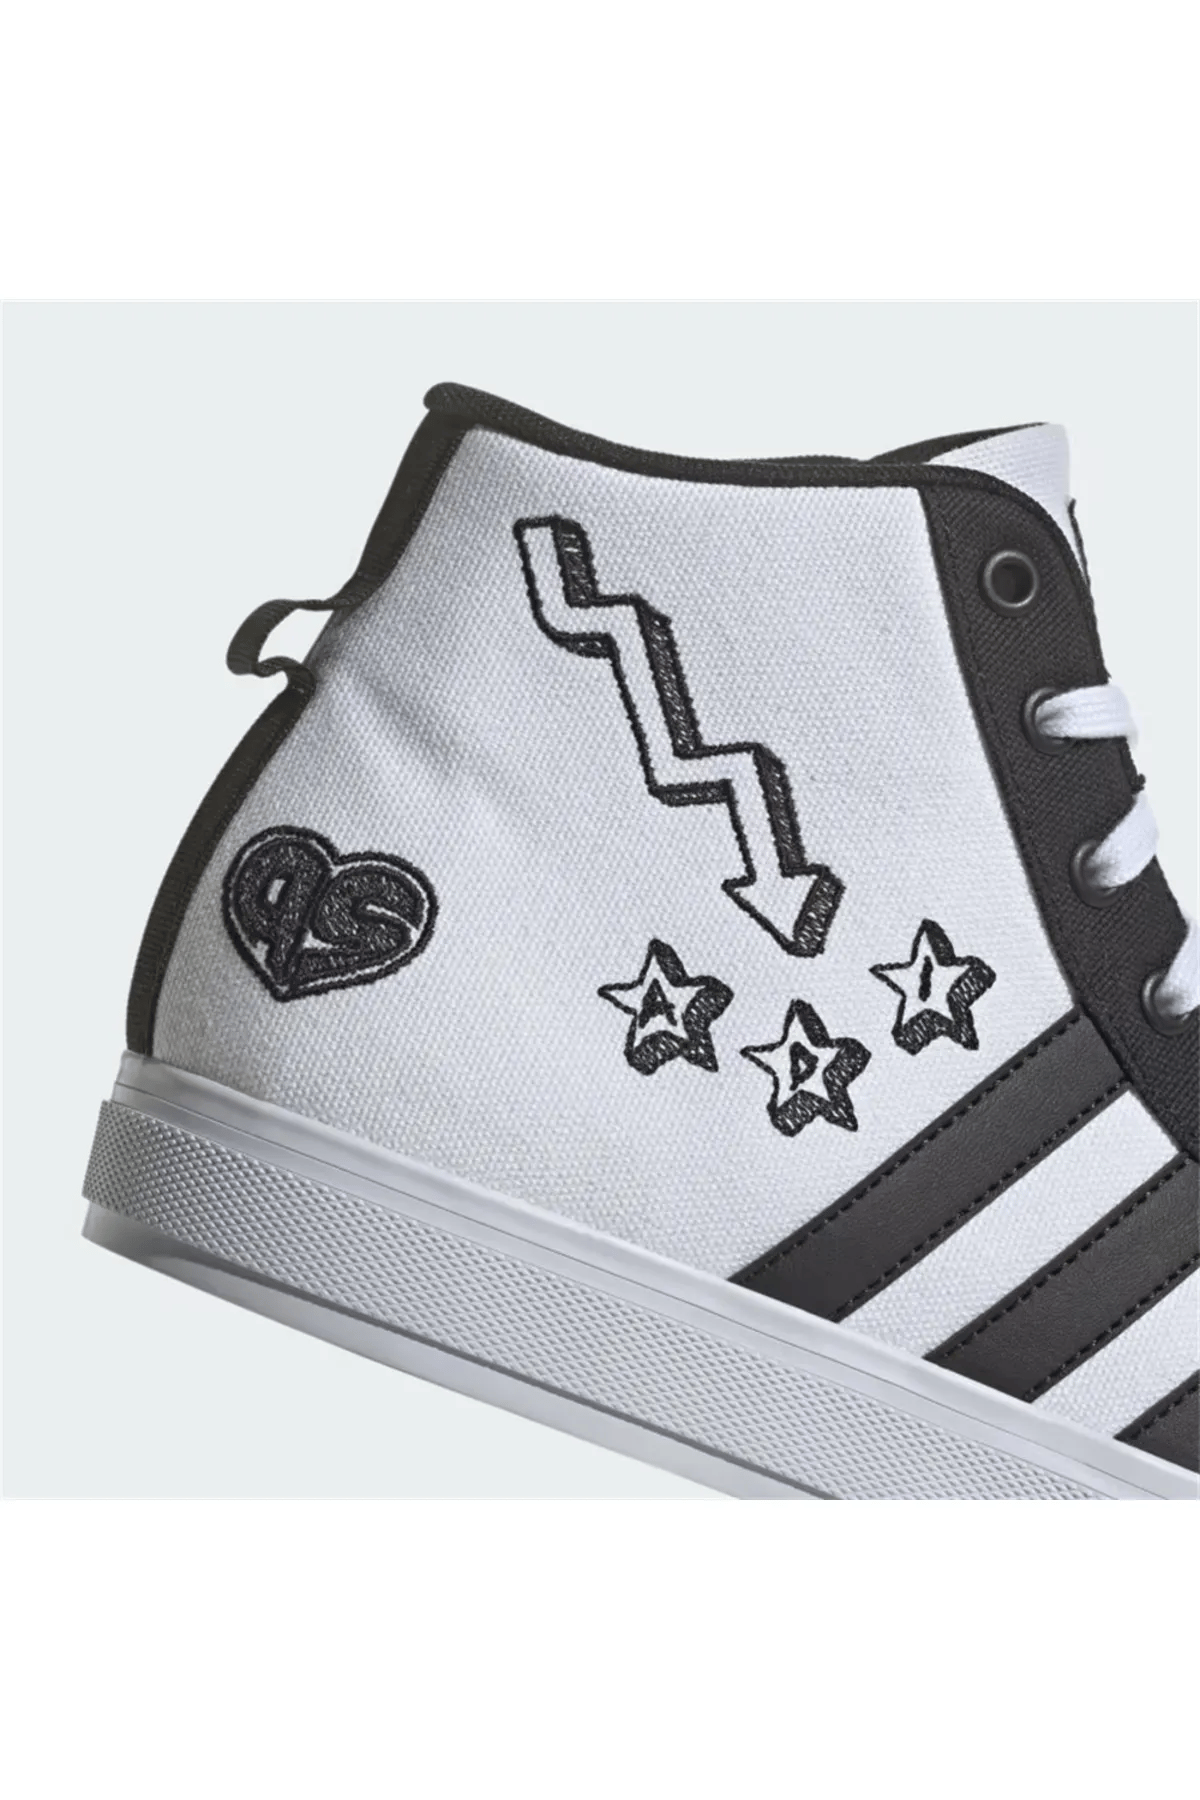 Adidas - Bravada 2.0 Cblack/Ftwwht/Cblack - Shoes